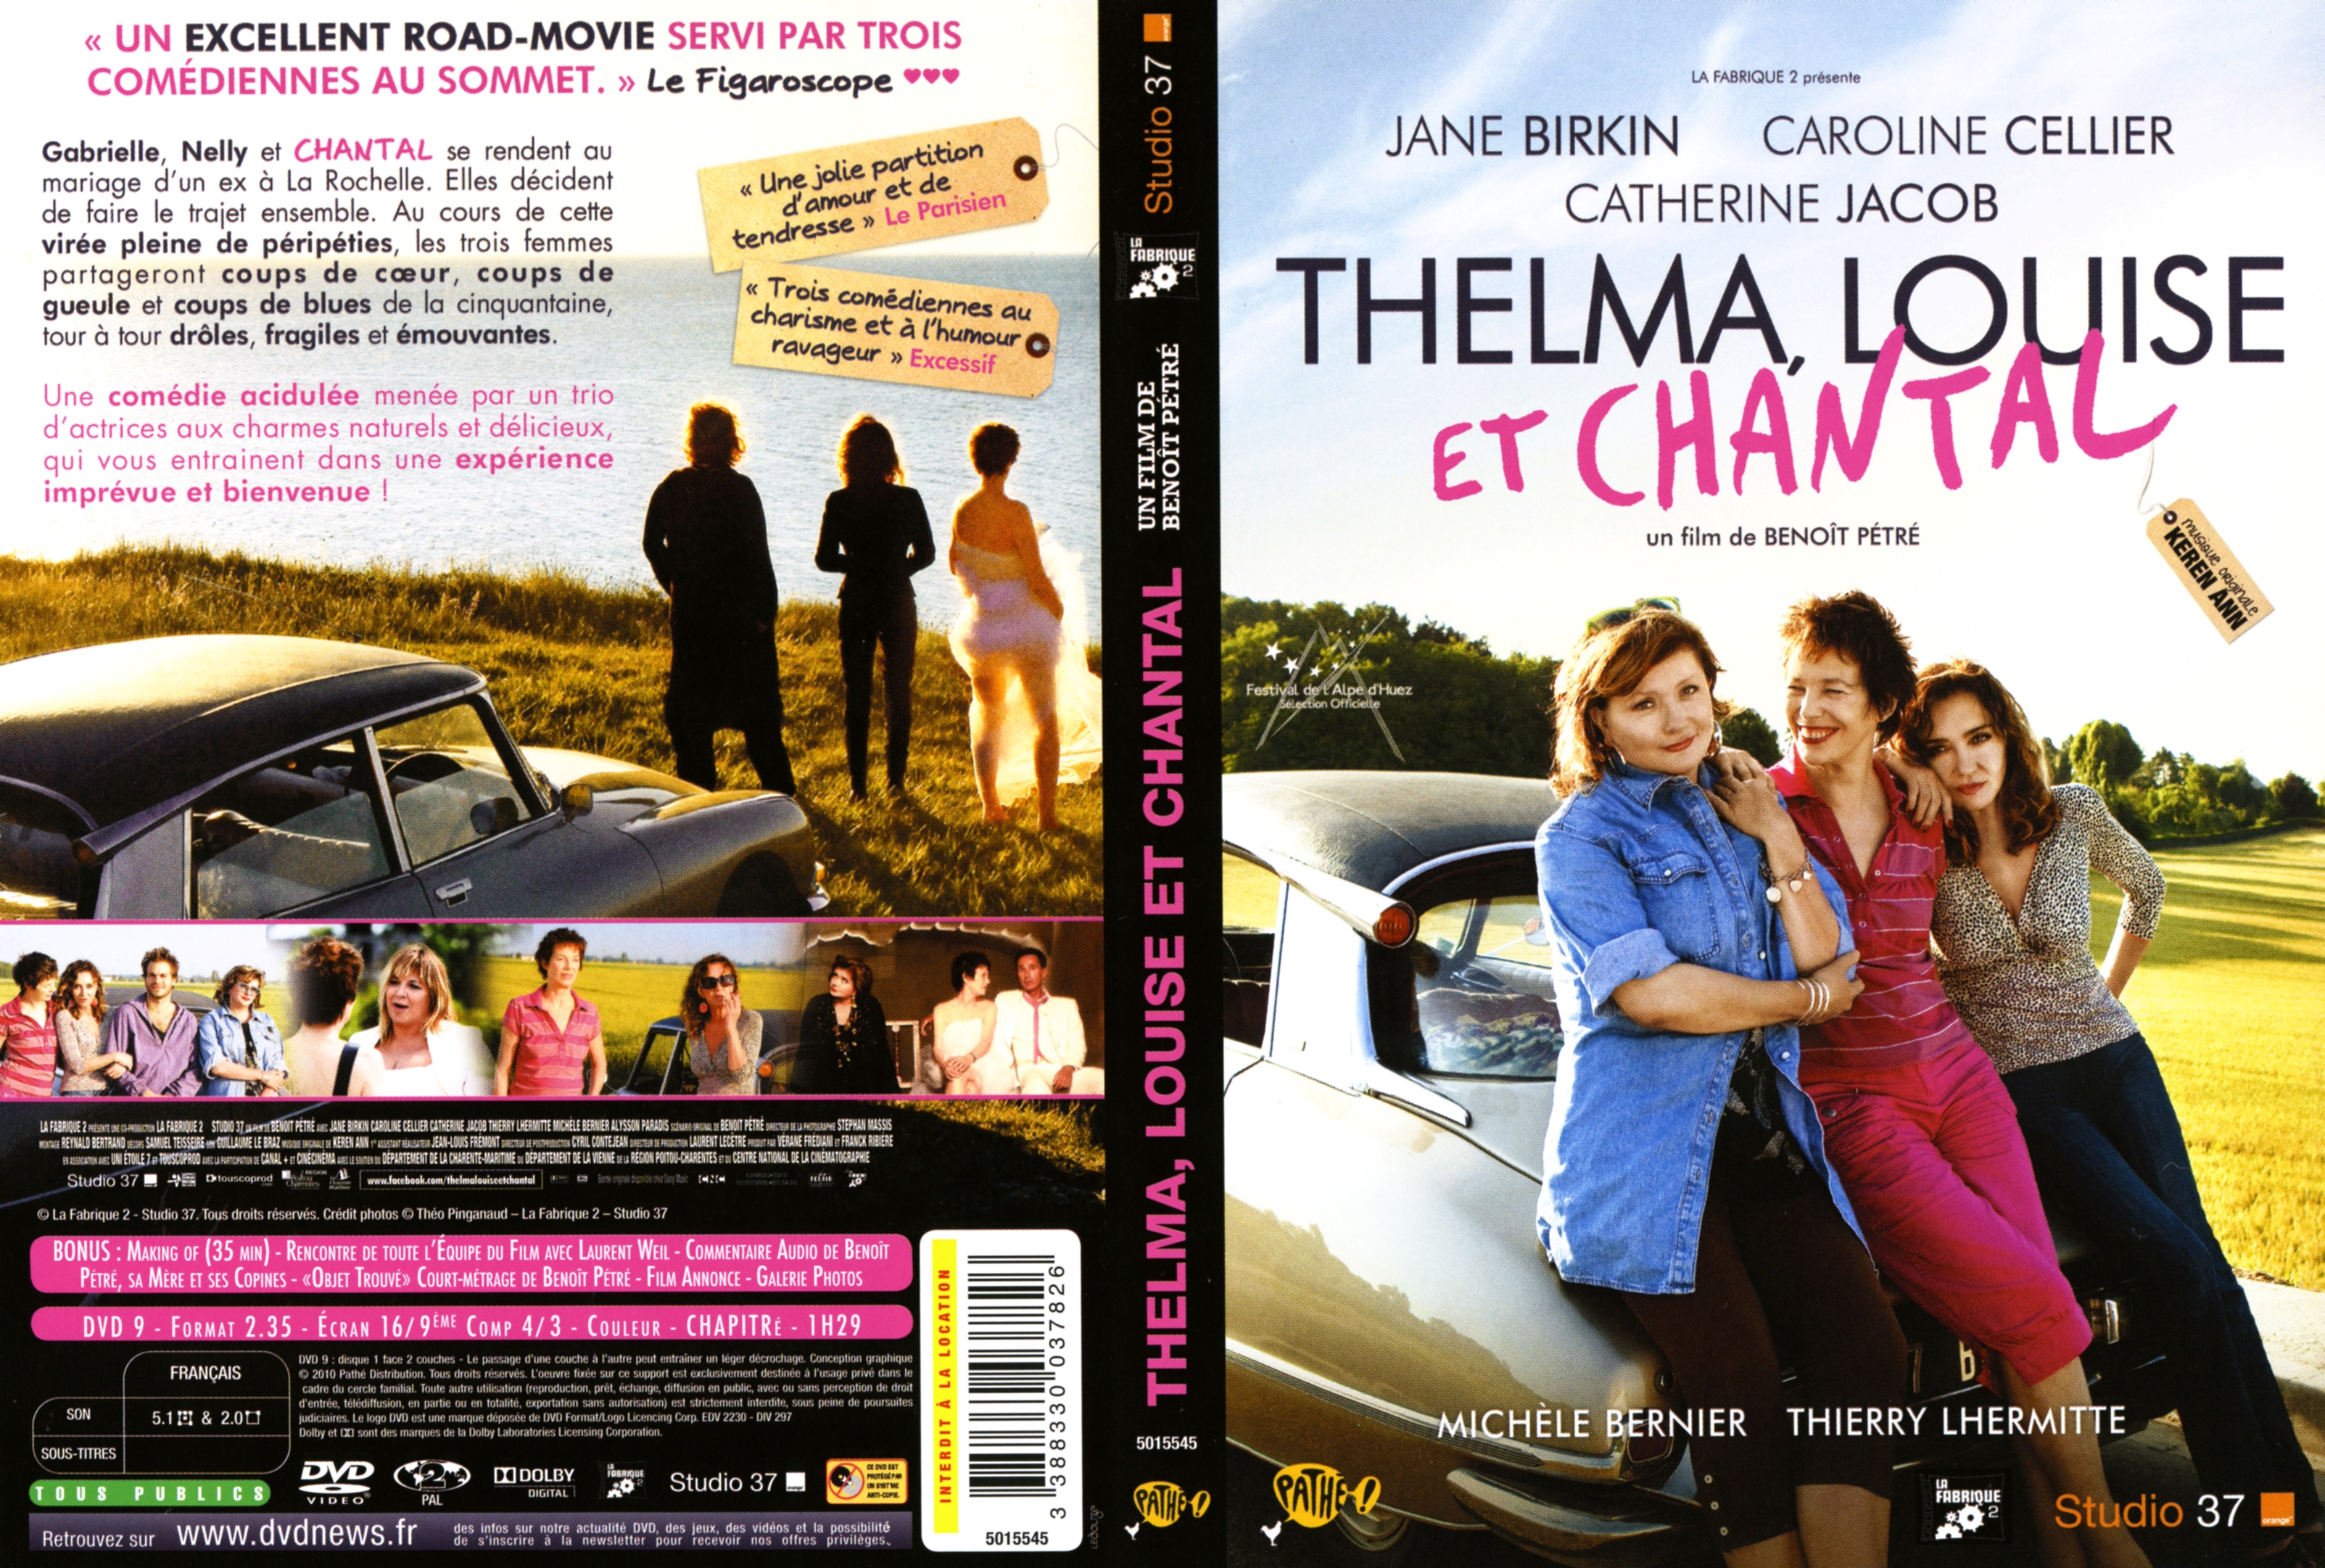 Jaquette DVD Thelma Louise et Chantal